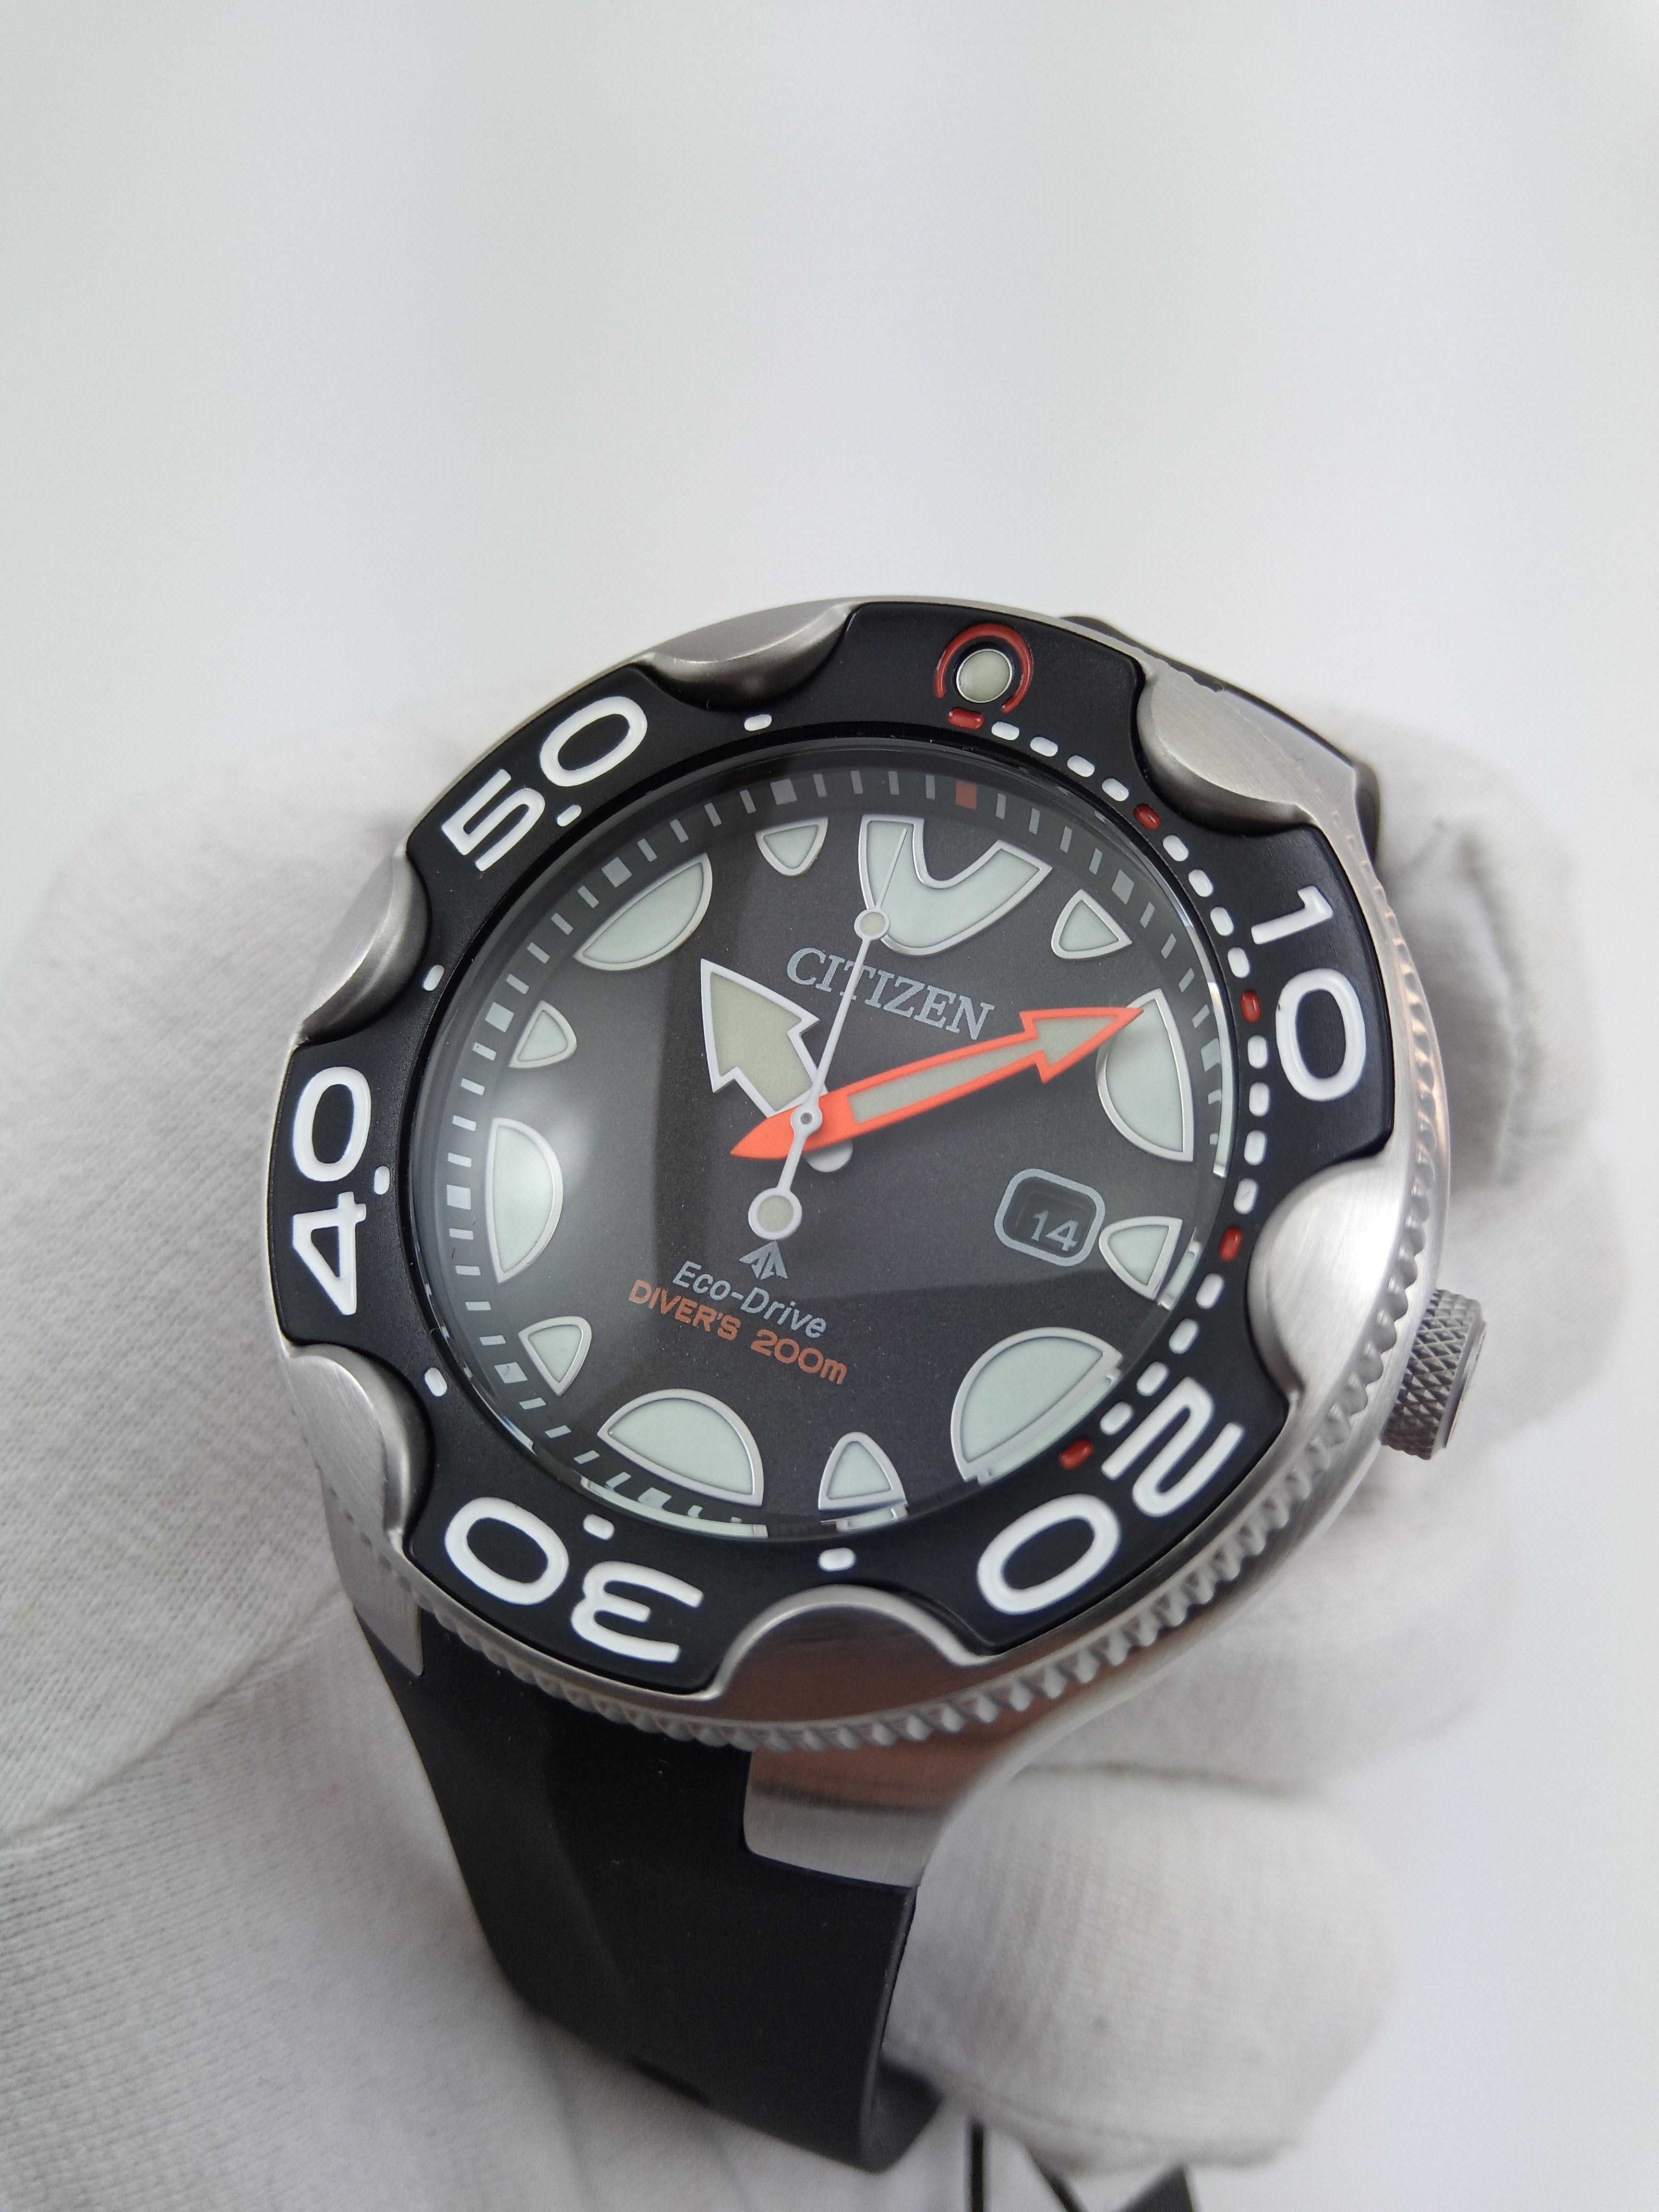 Японские дайверы 200м Citizen Eco-Drive BN0230-04E часы спецсерия Orca